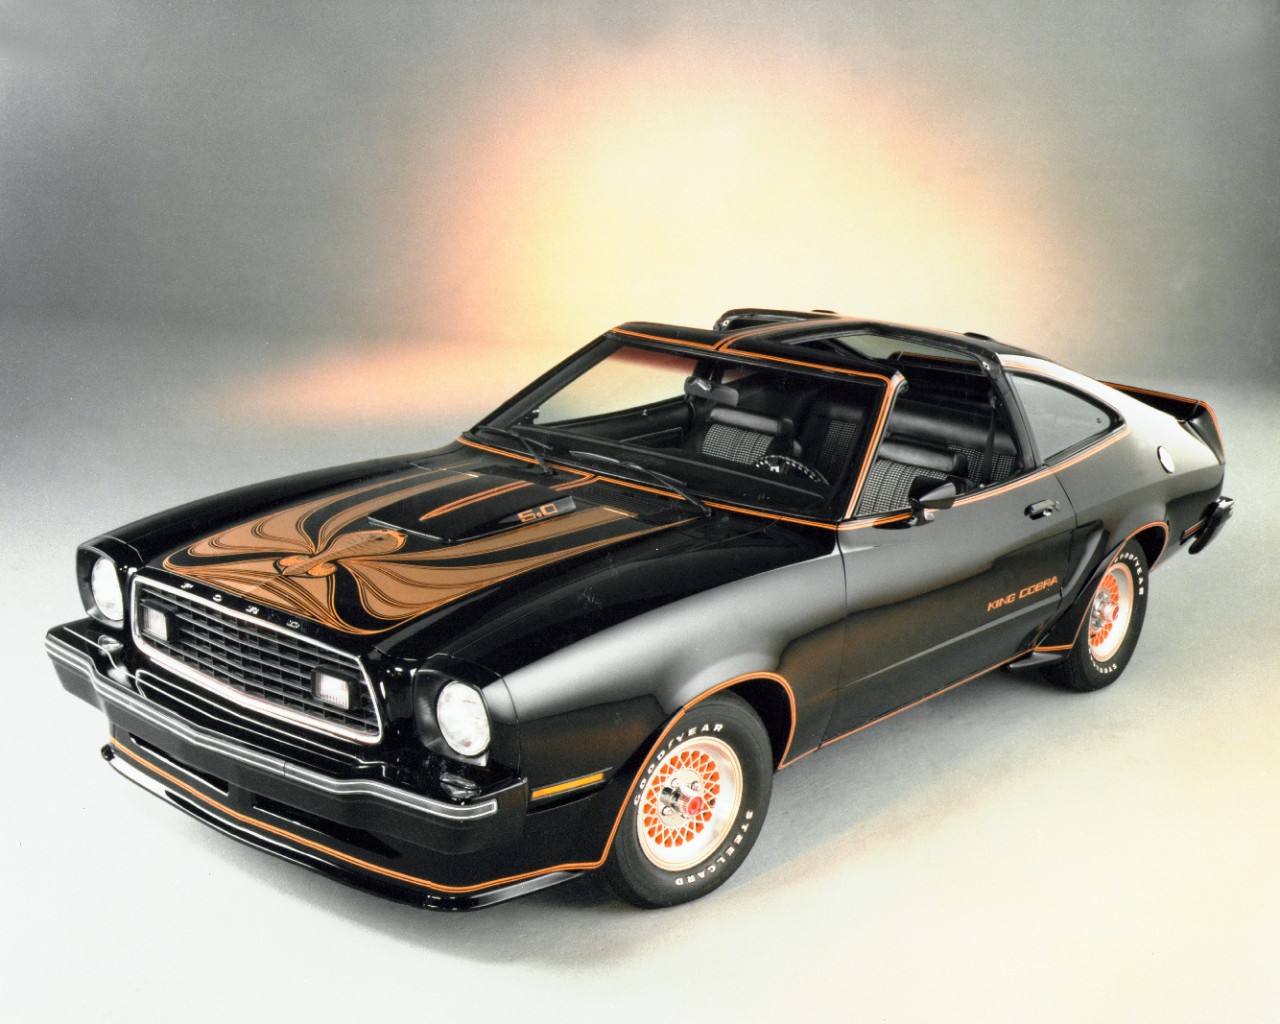 1978 Ford Mustang II King Cobra in black and orange